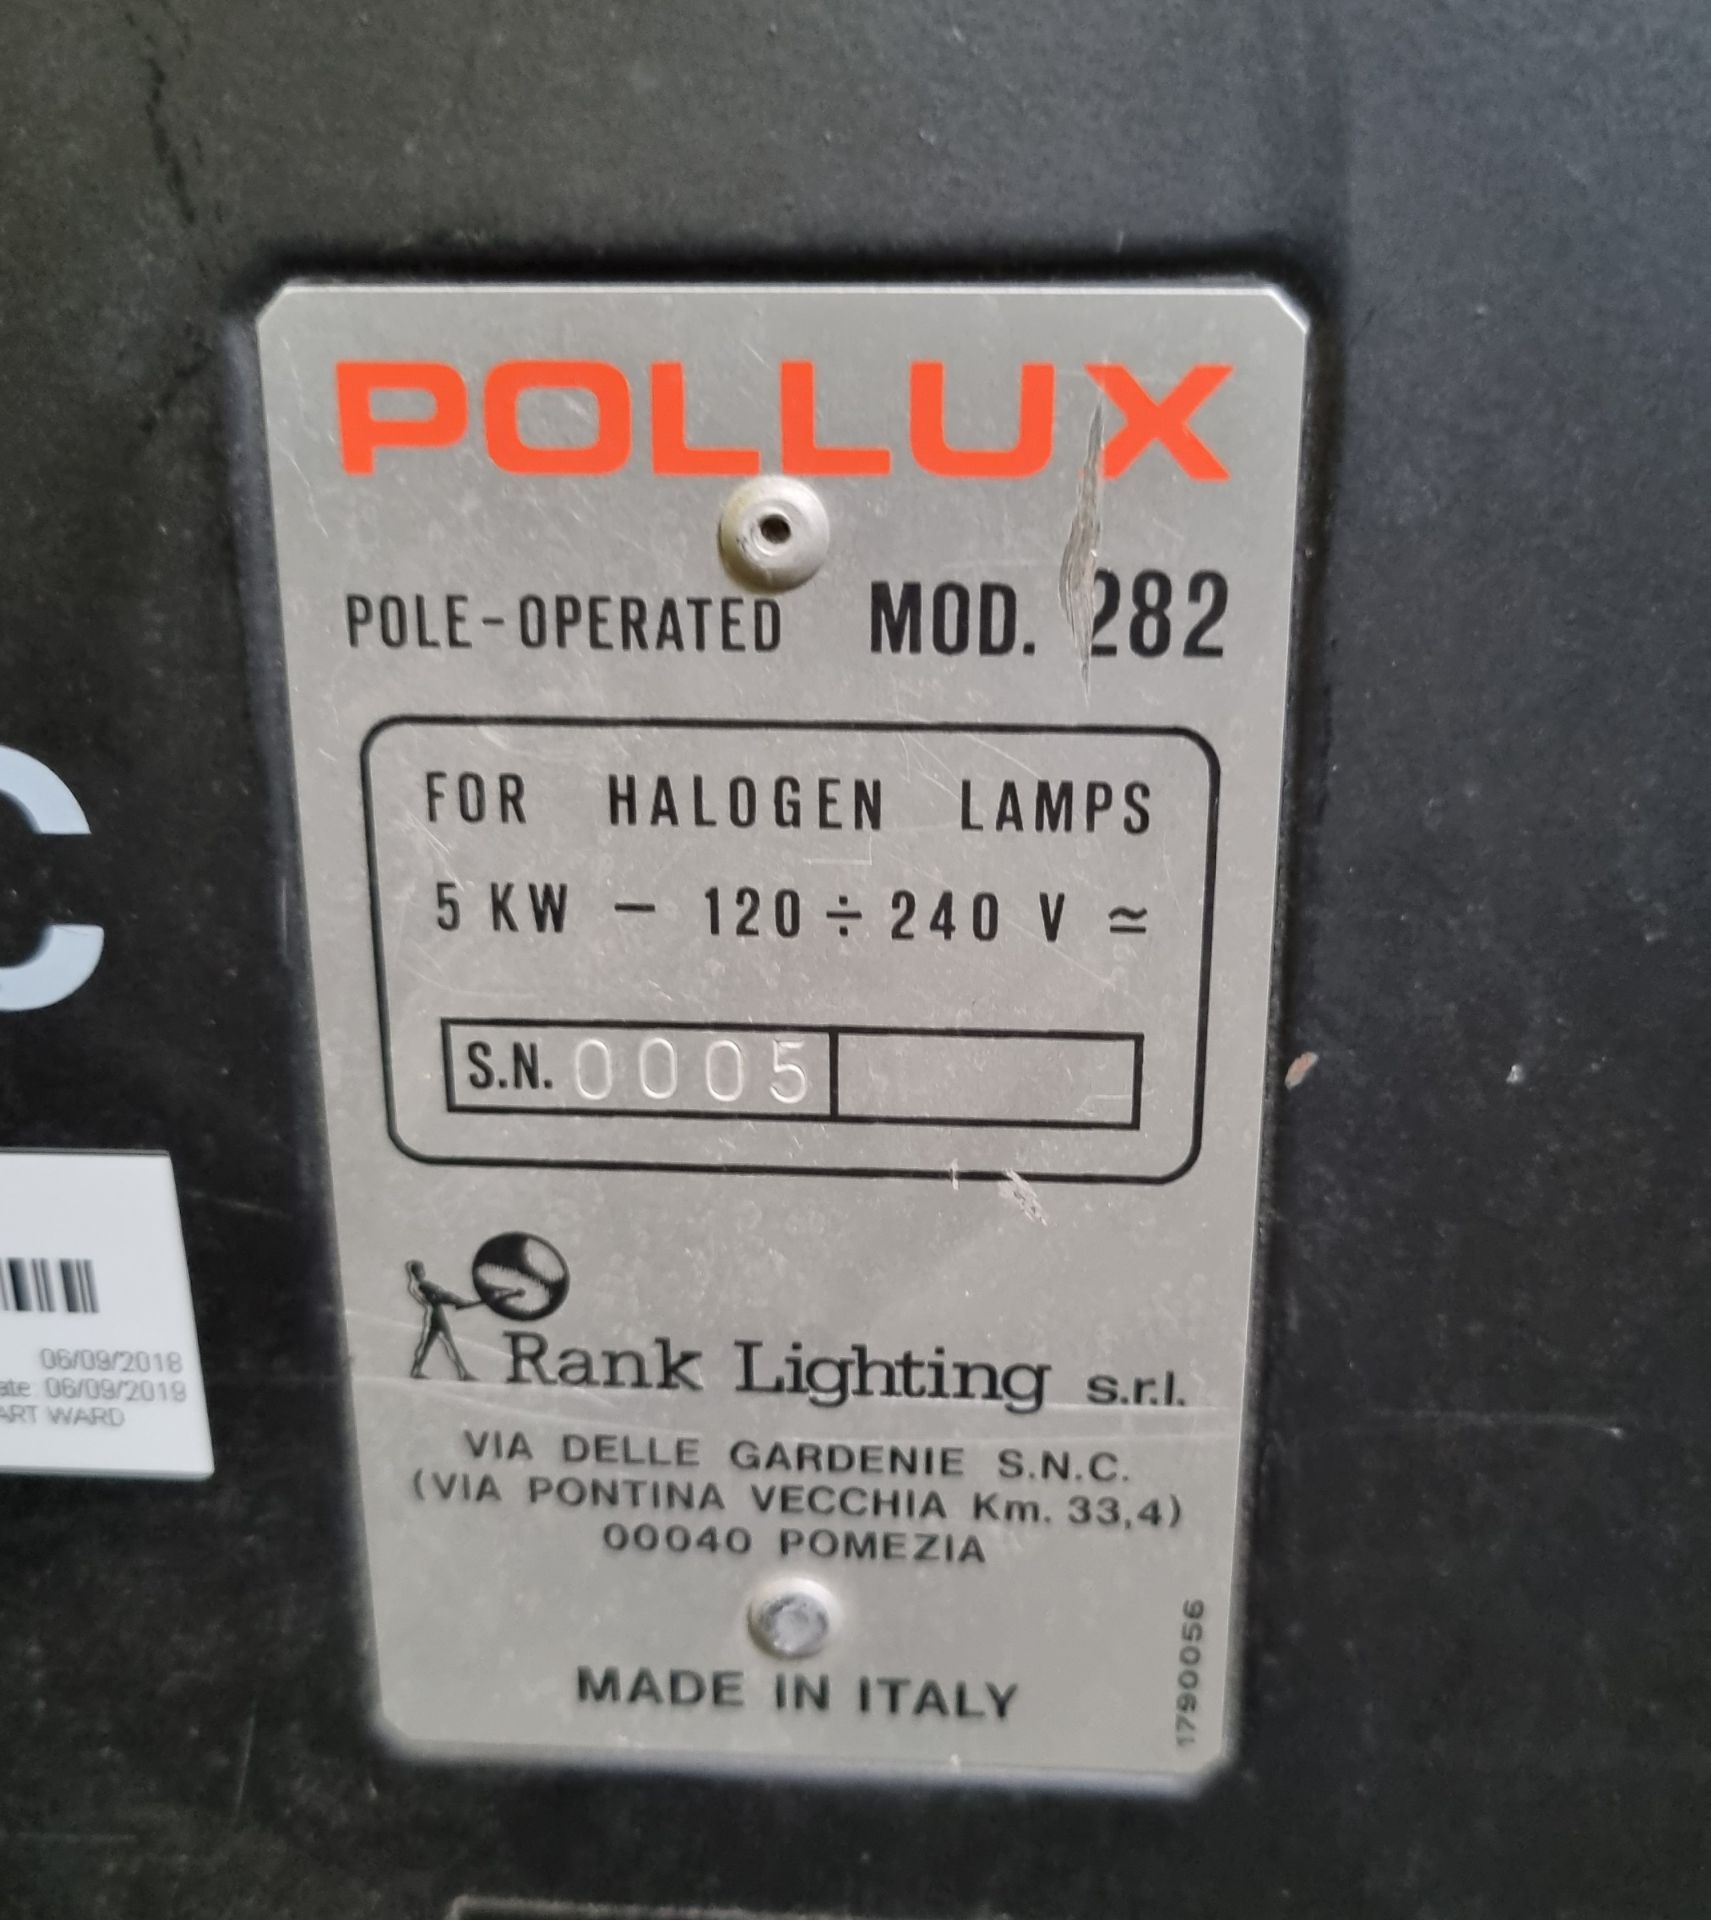 3x Strand Quartzcolor Pollux 282 stage lighting units - W 490 x D 380 x H 740 mm - Image 5 of 5